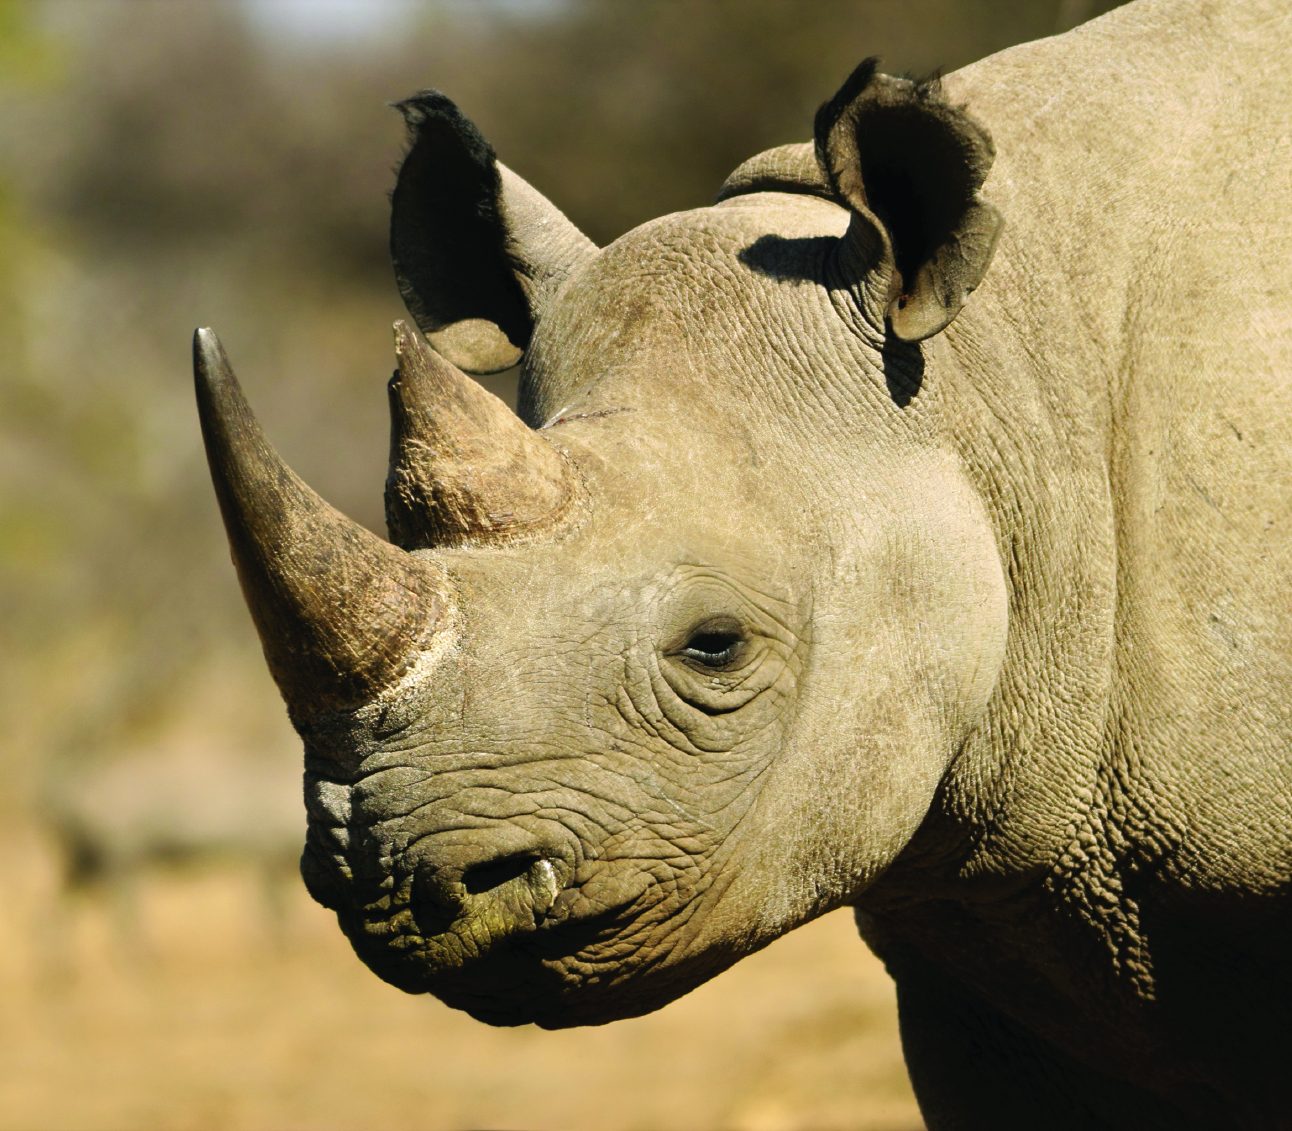 A close-up image of a rhino